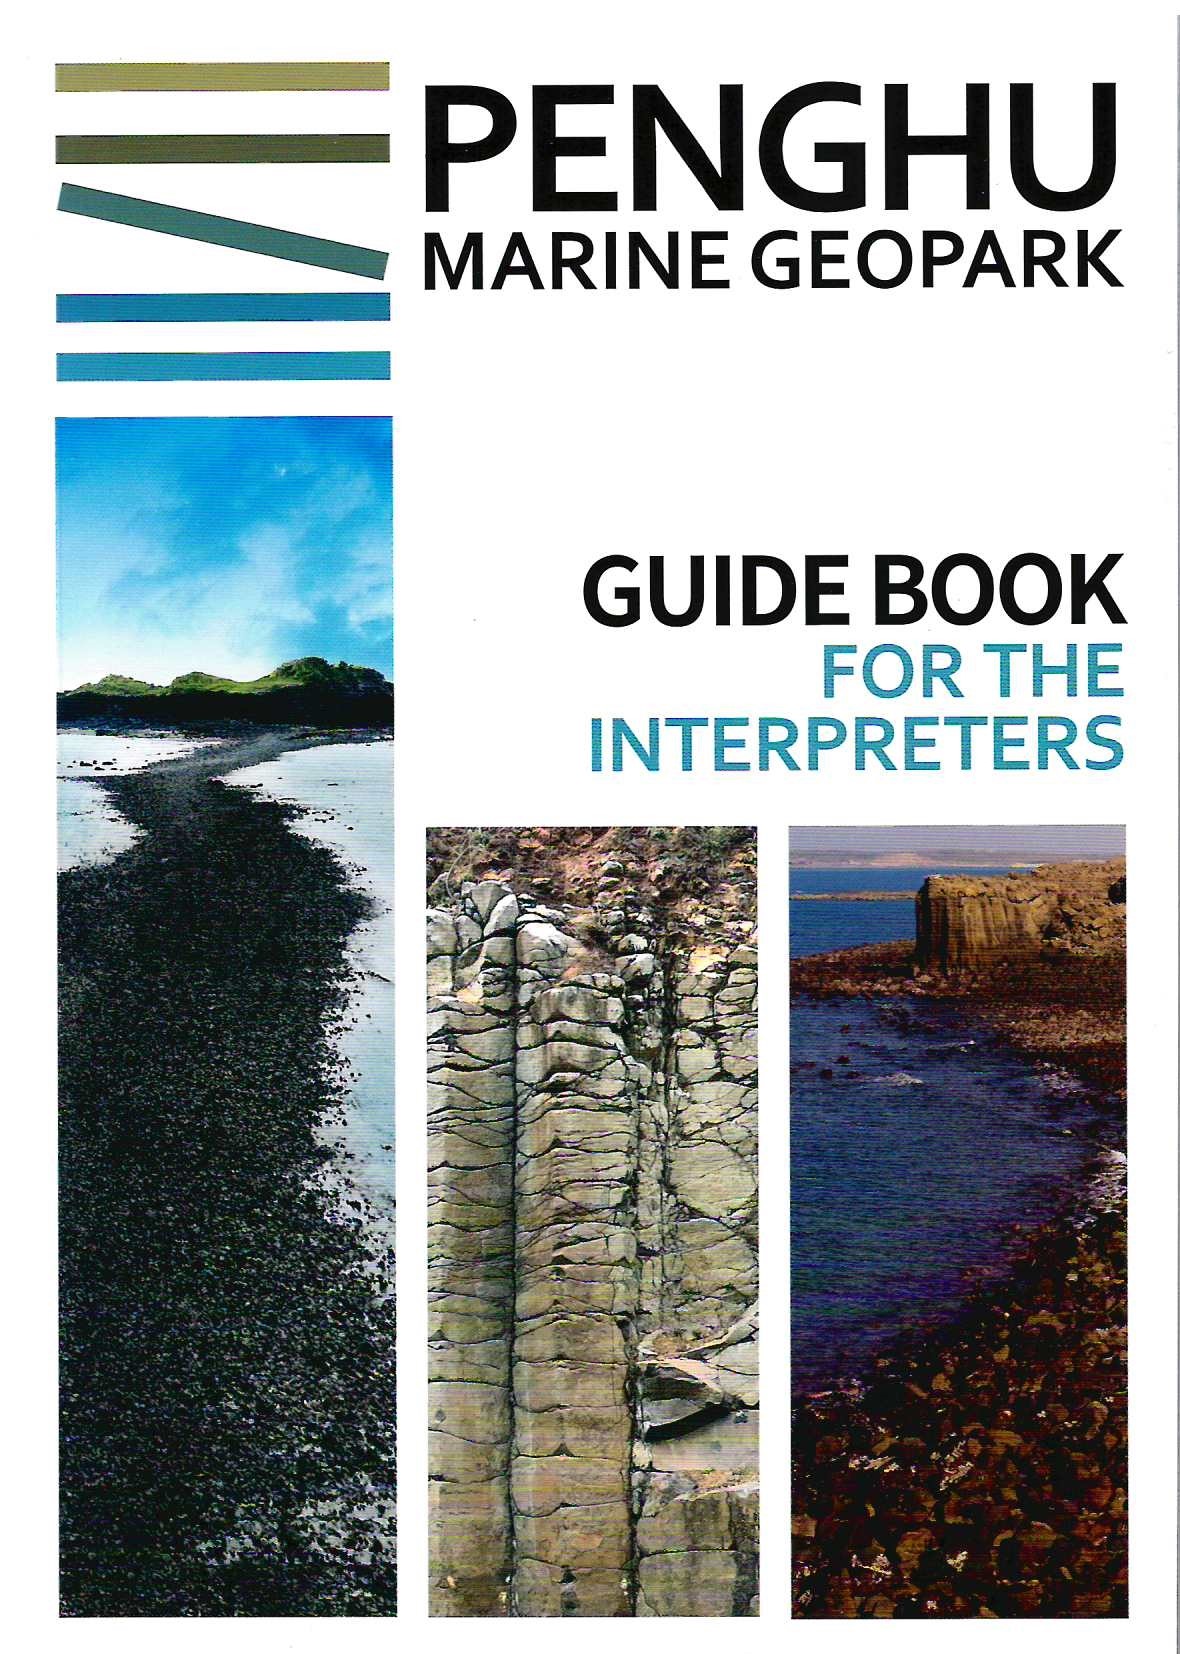 Guide book for the interpreters, Penghu Marine Geopark